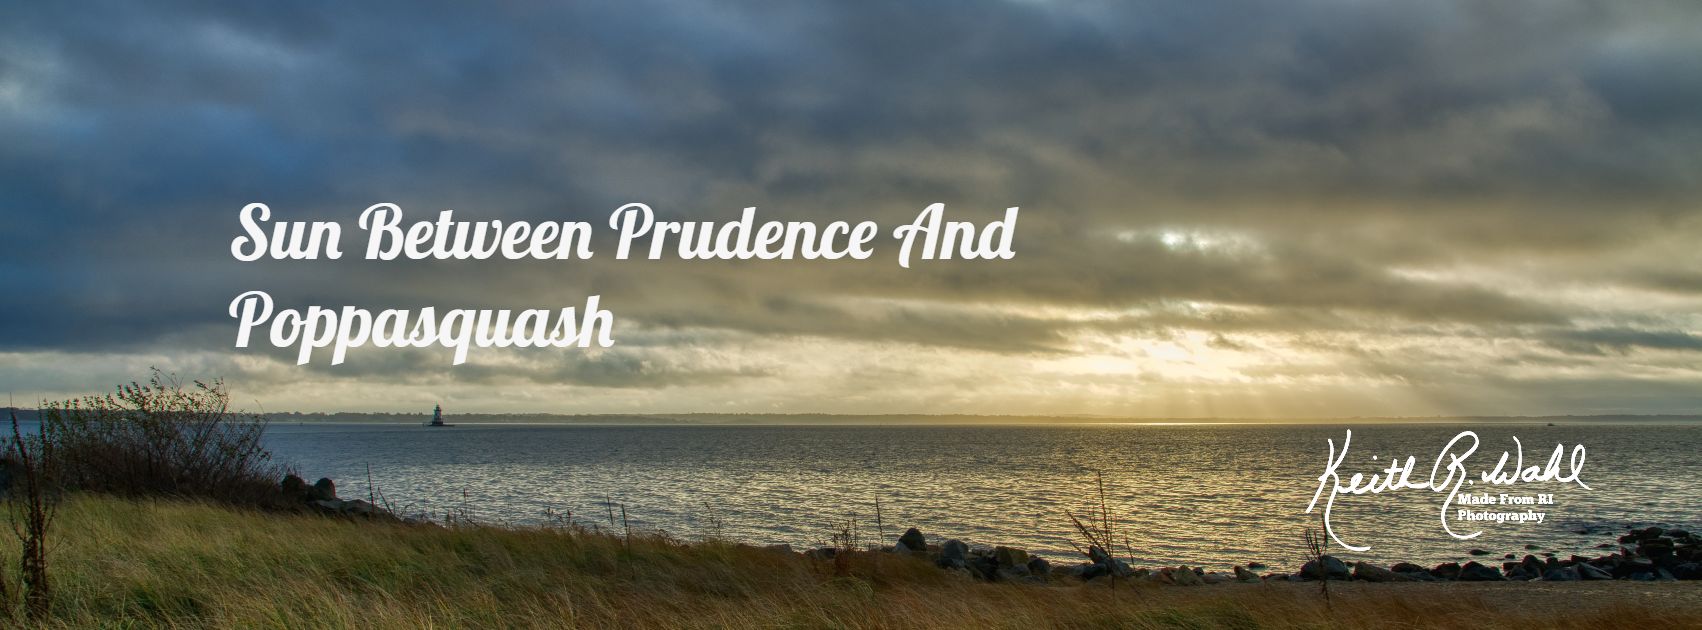 Sun Between Prudence and Poppasquash